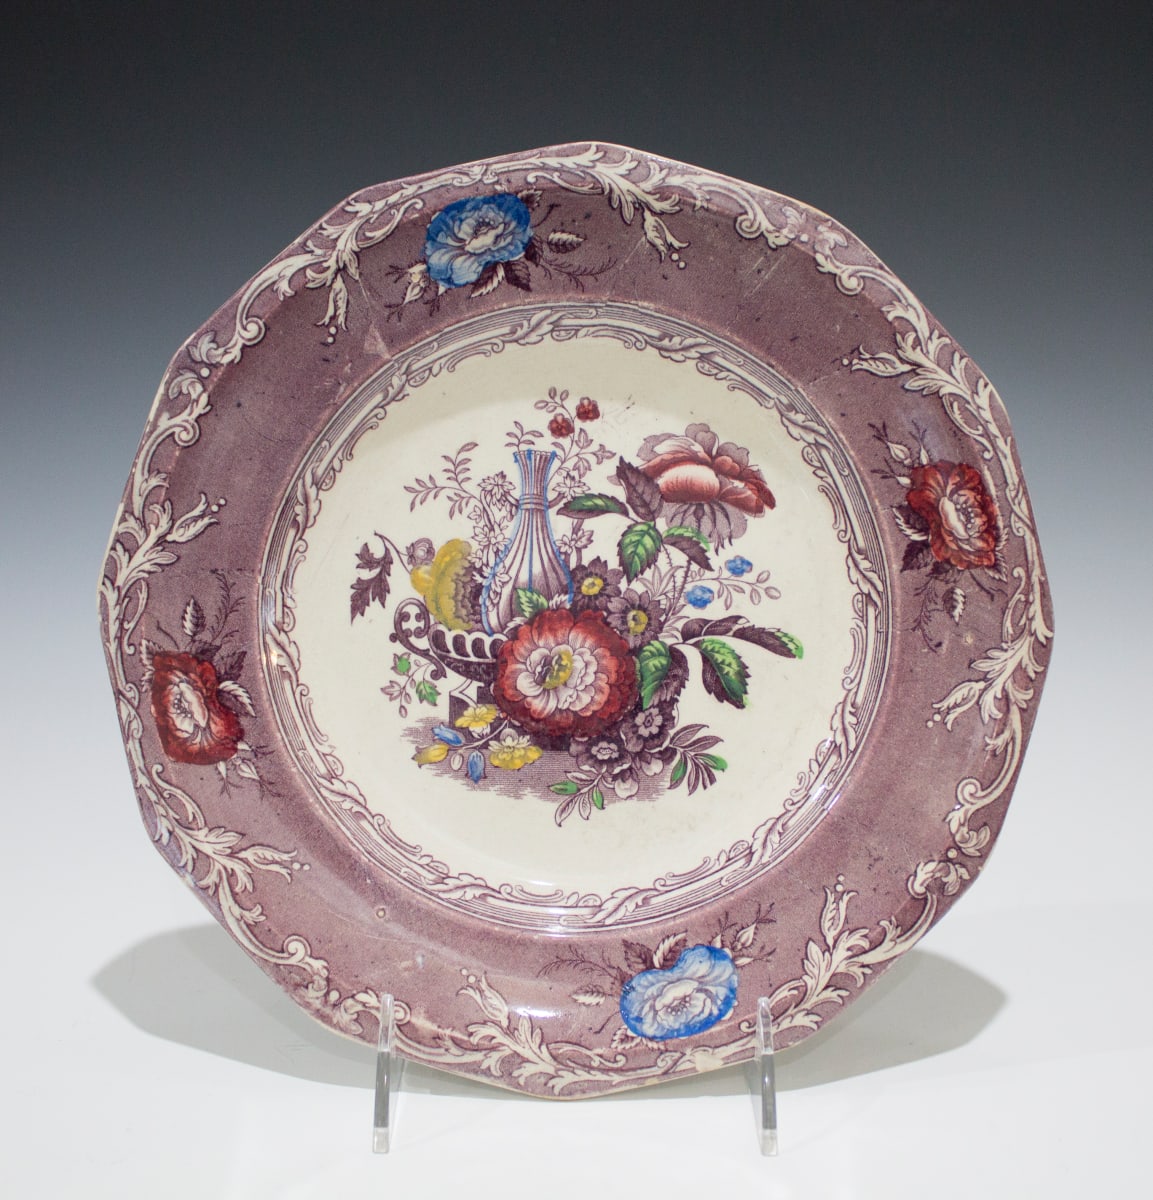 Plate by George Wooliscroft 